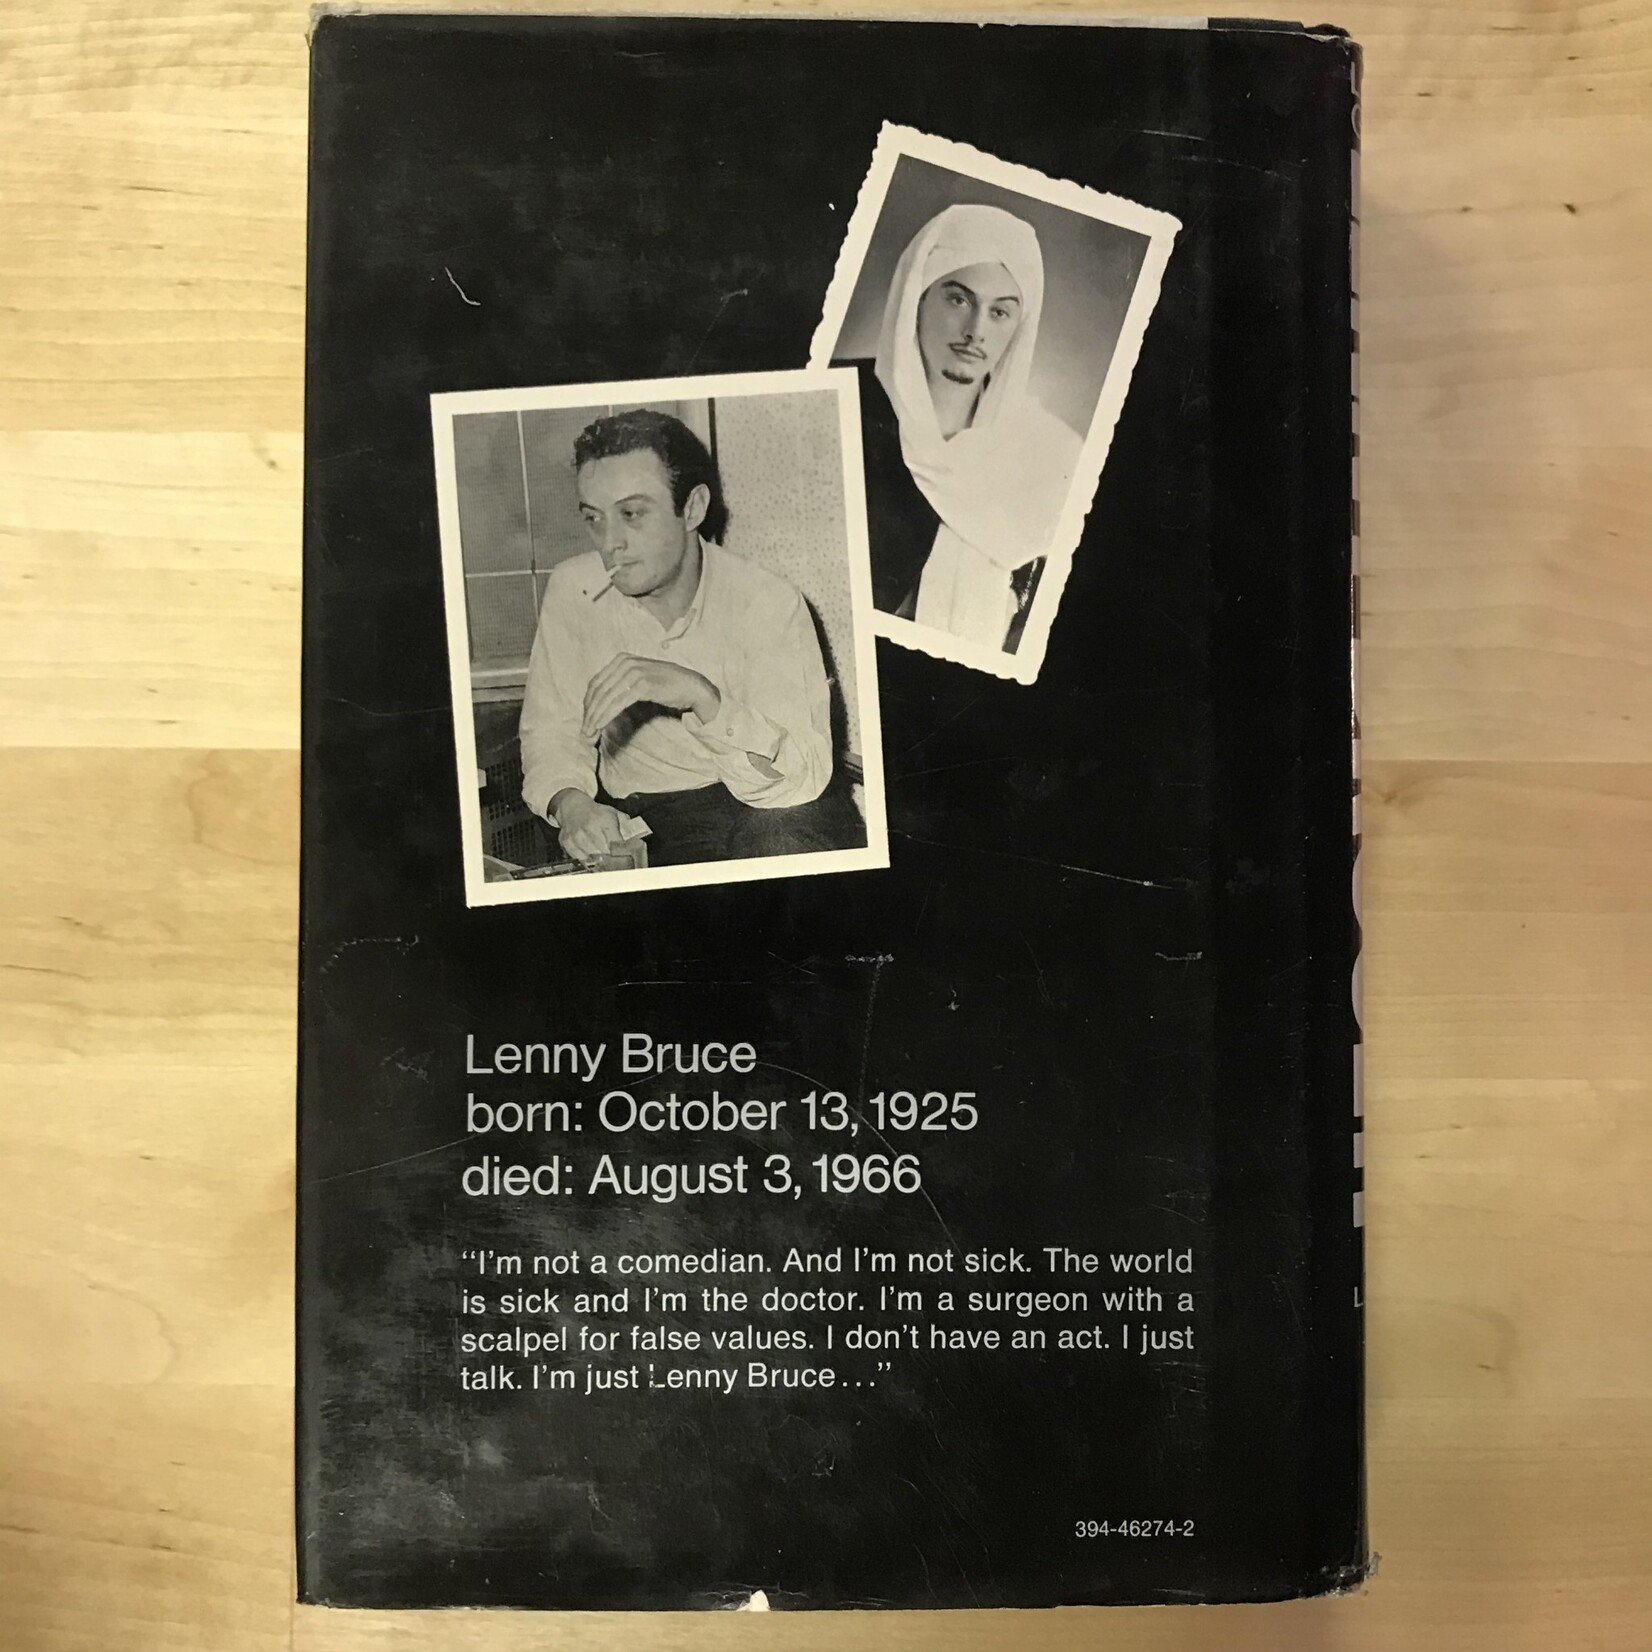 Albert Goldman - Ladies And Gentlemen Lenny Bruce!! - Hardback (USED - FE)